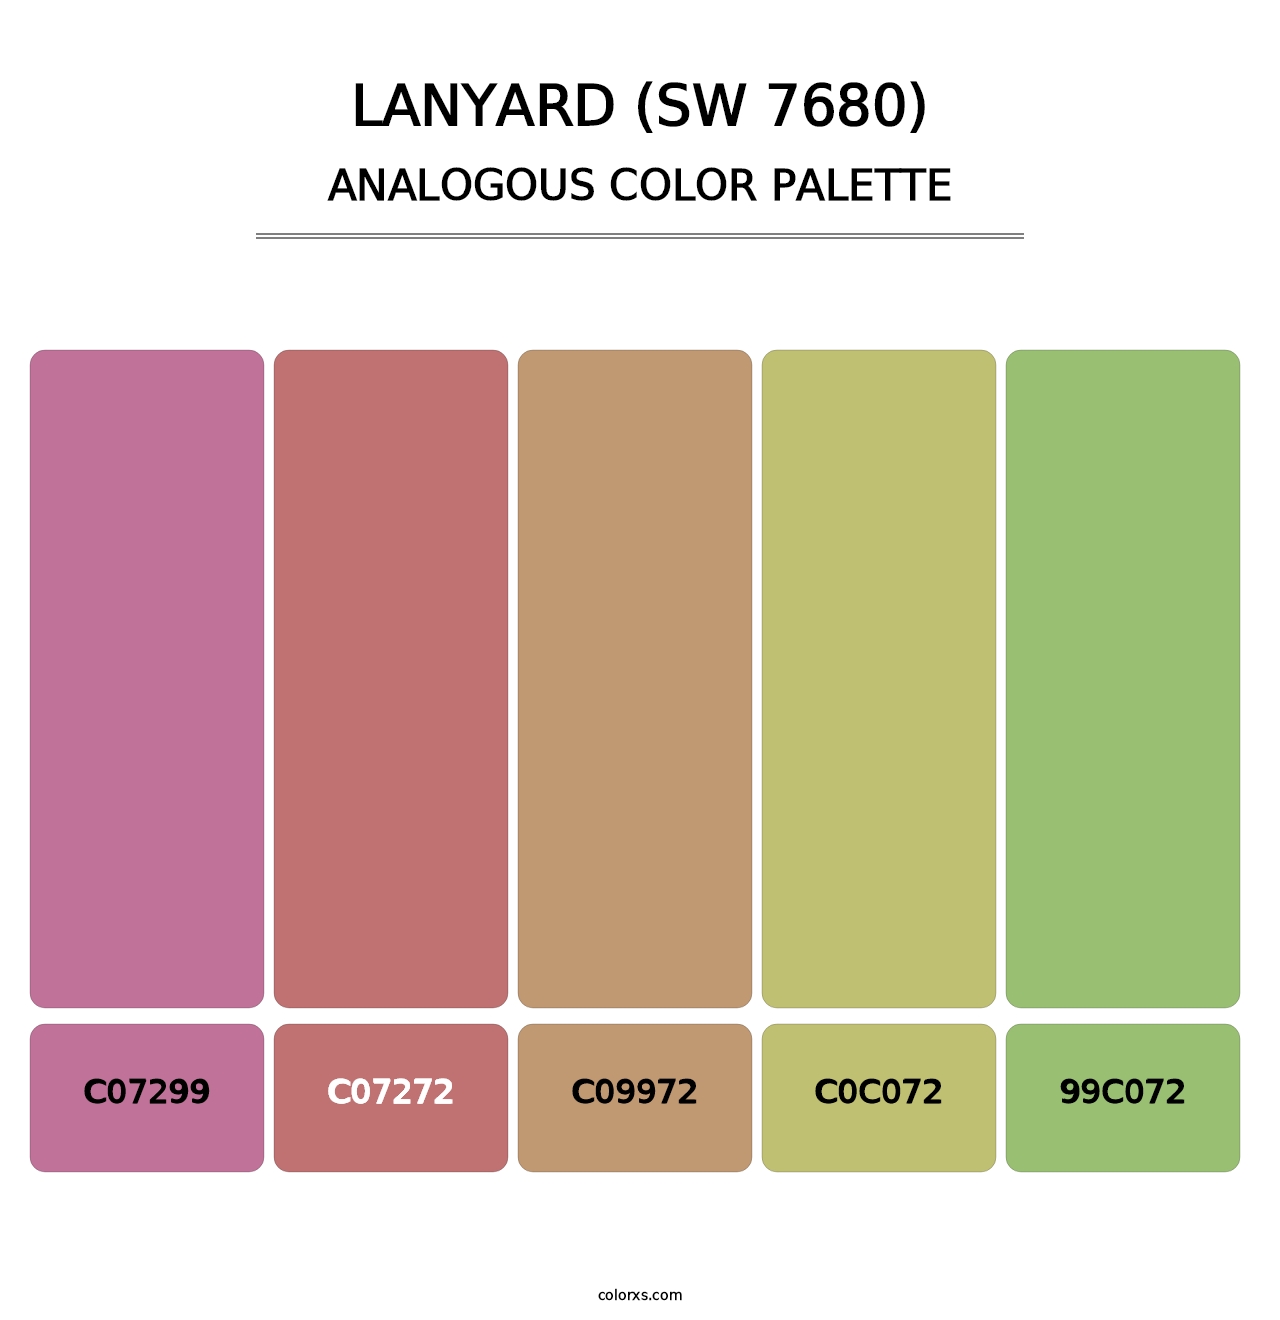 Lanyard (SW 7680) - Analogous Color Palette